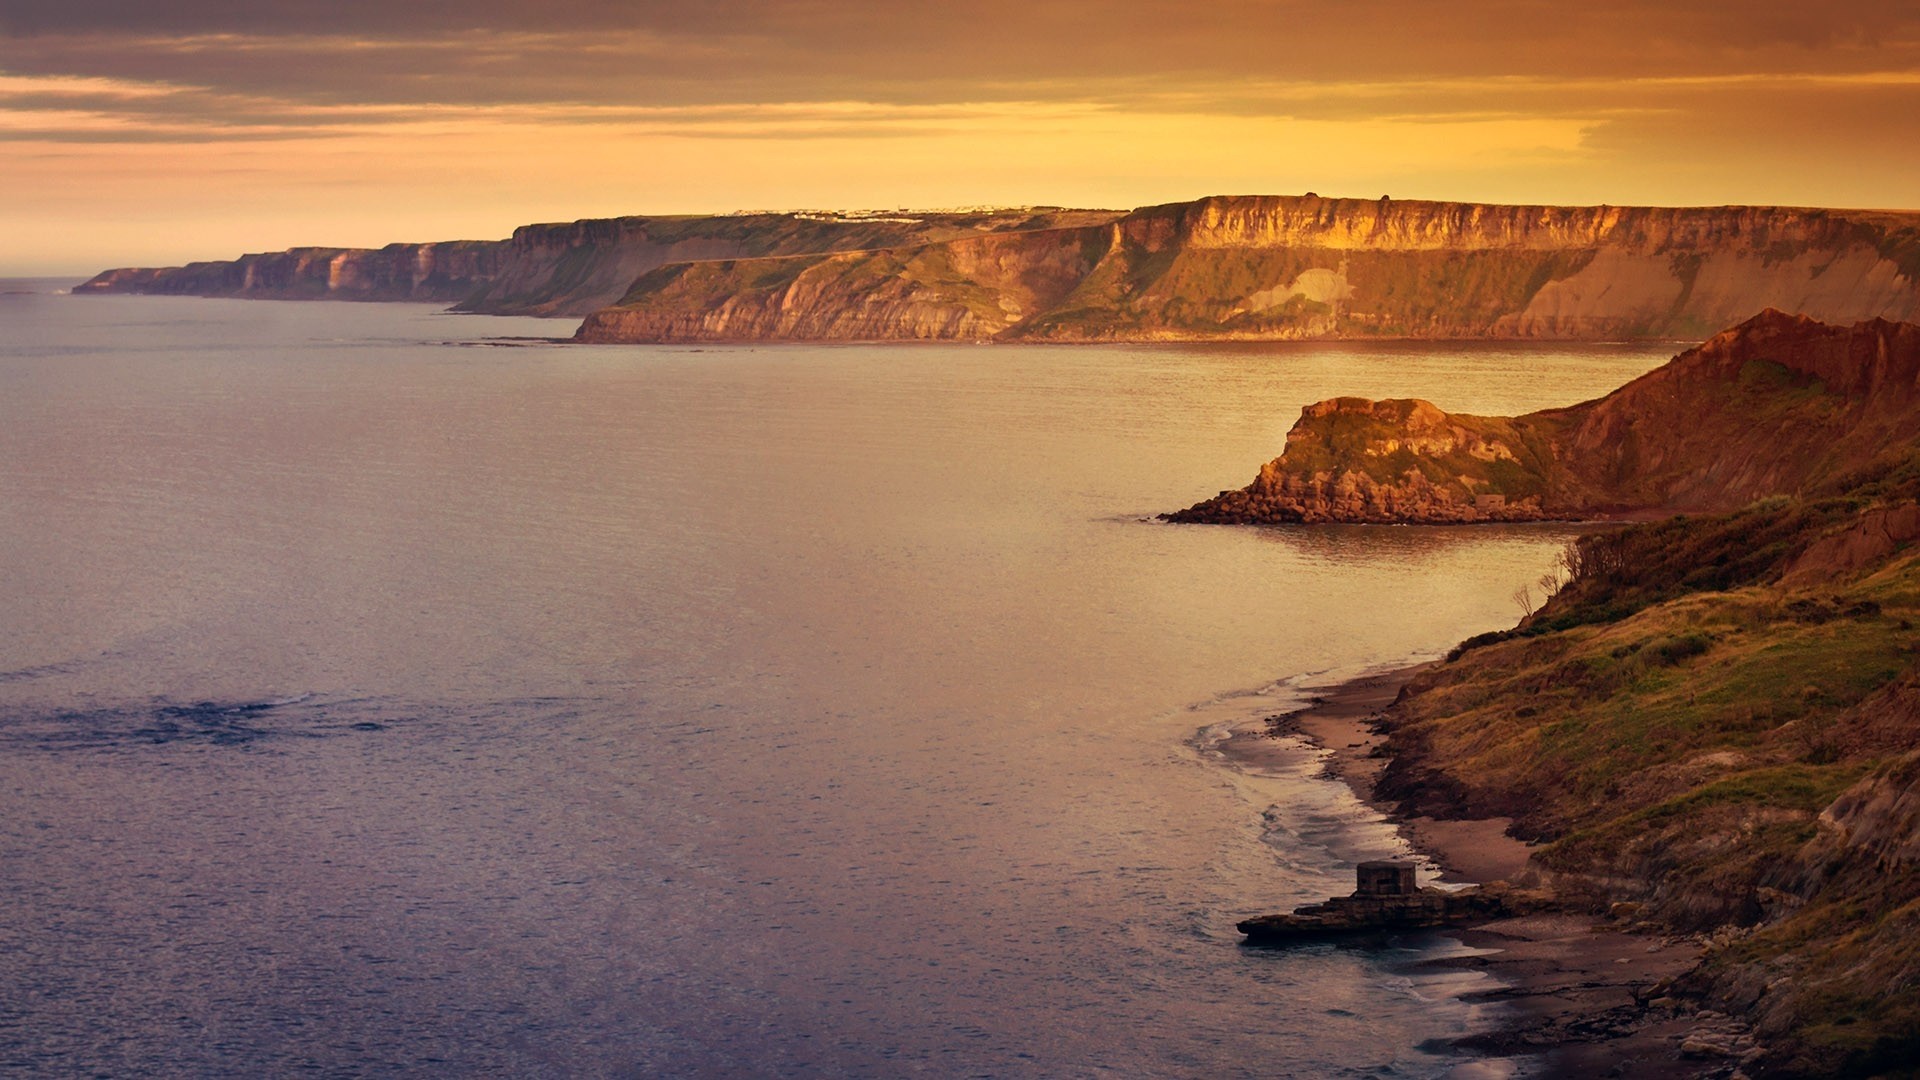 General 1920x1080 landscape nature coast cliff sea dusk